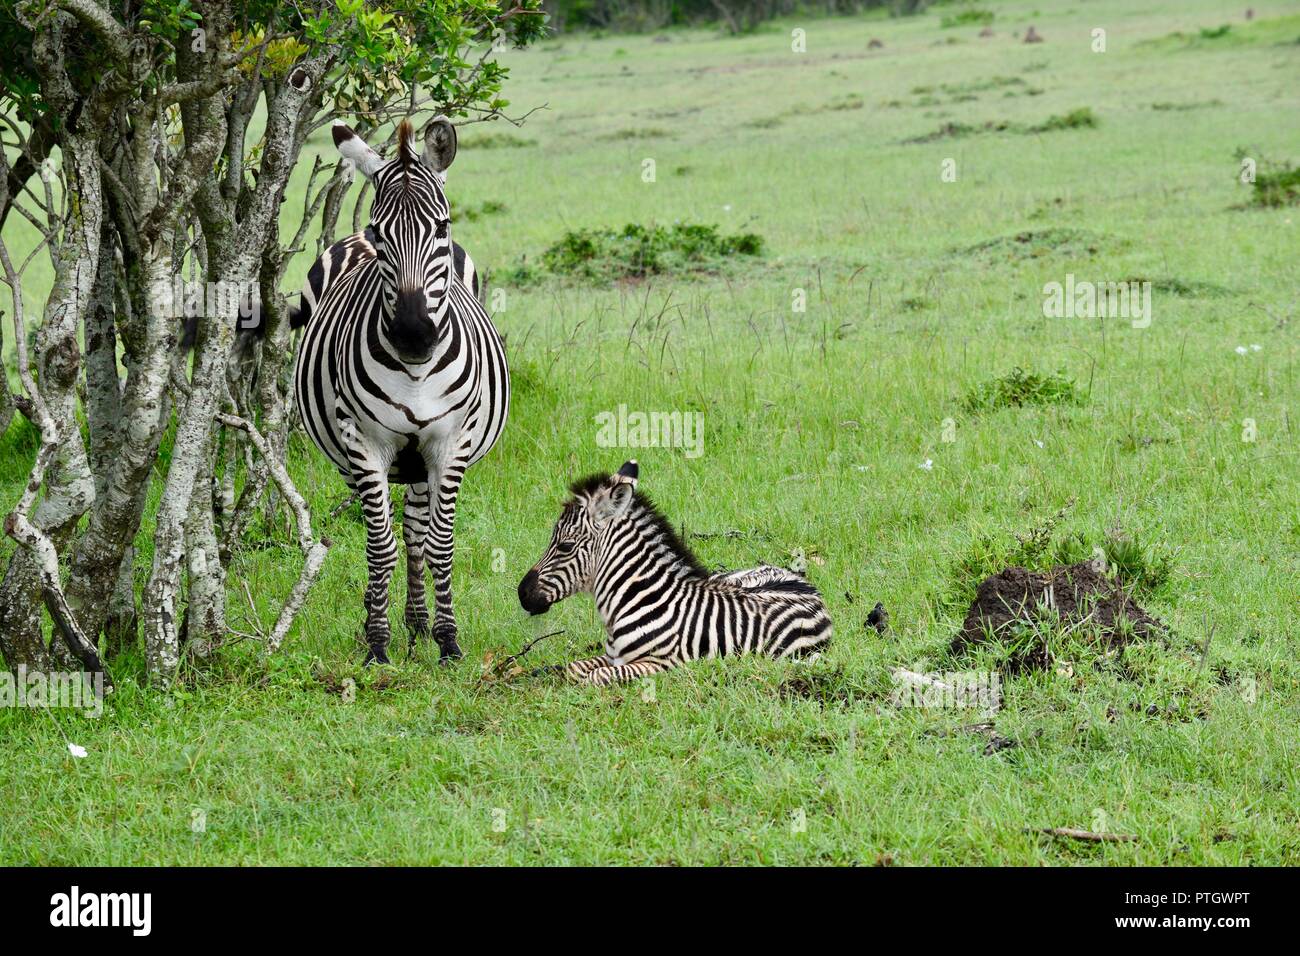 Cute baby zebra with mama zebra Stock Photo